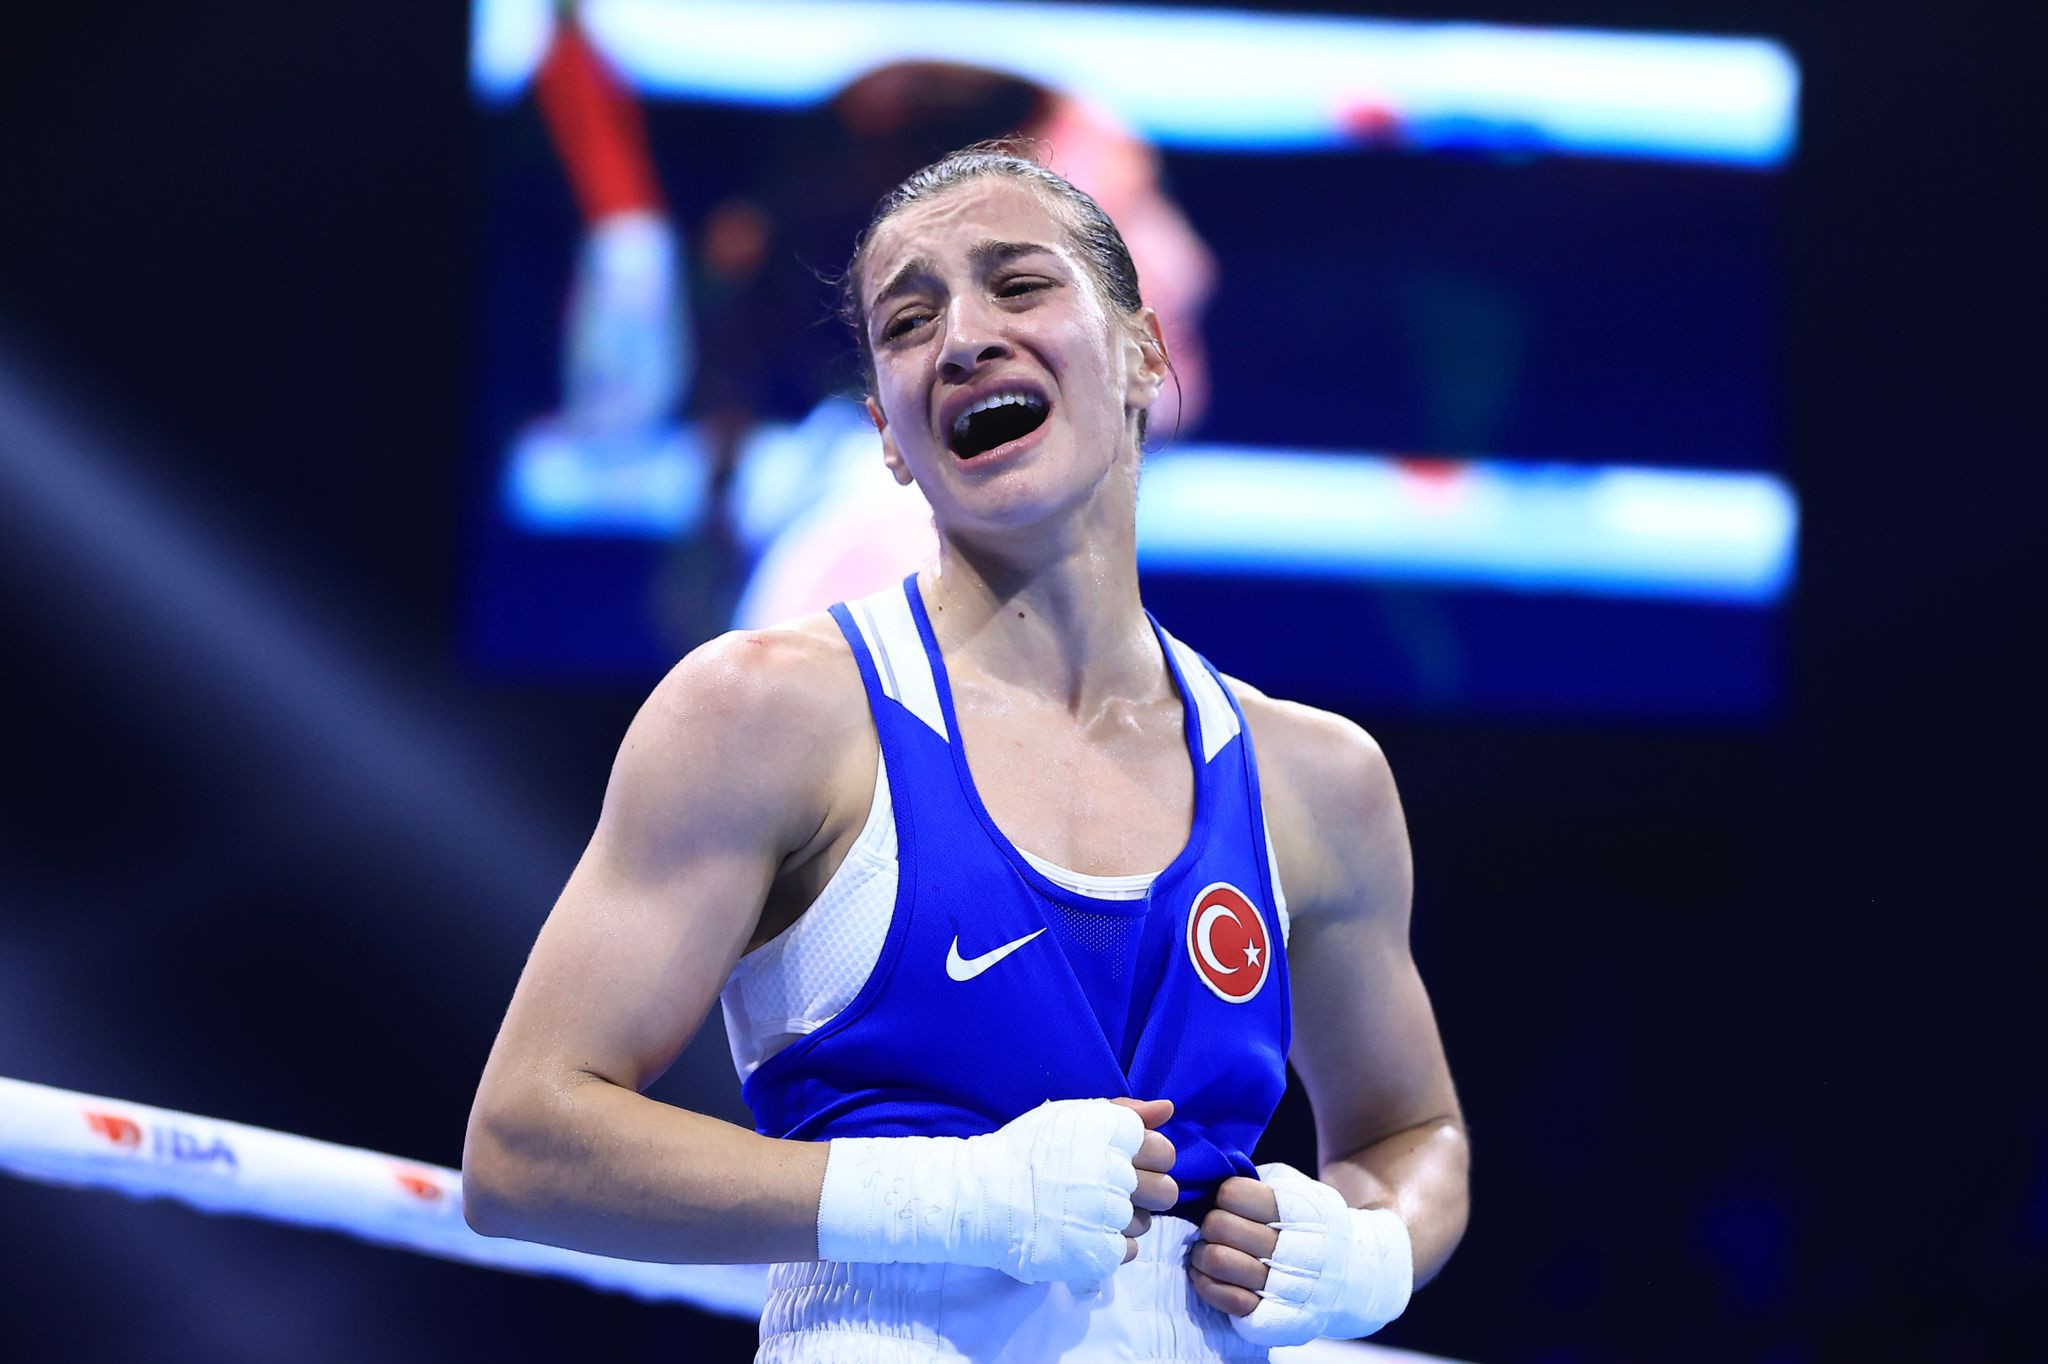 Buse Naz Çakıroğlu won her first title at under-50kg ©IBA